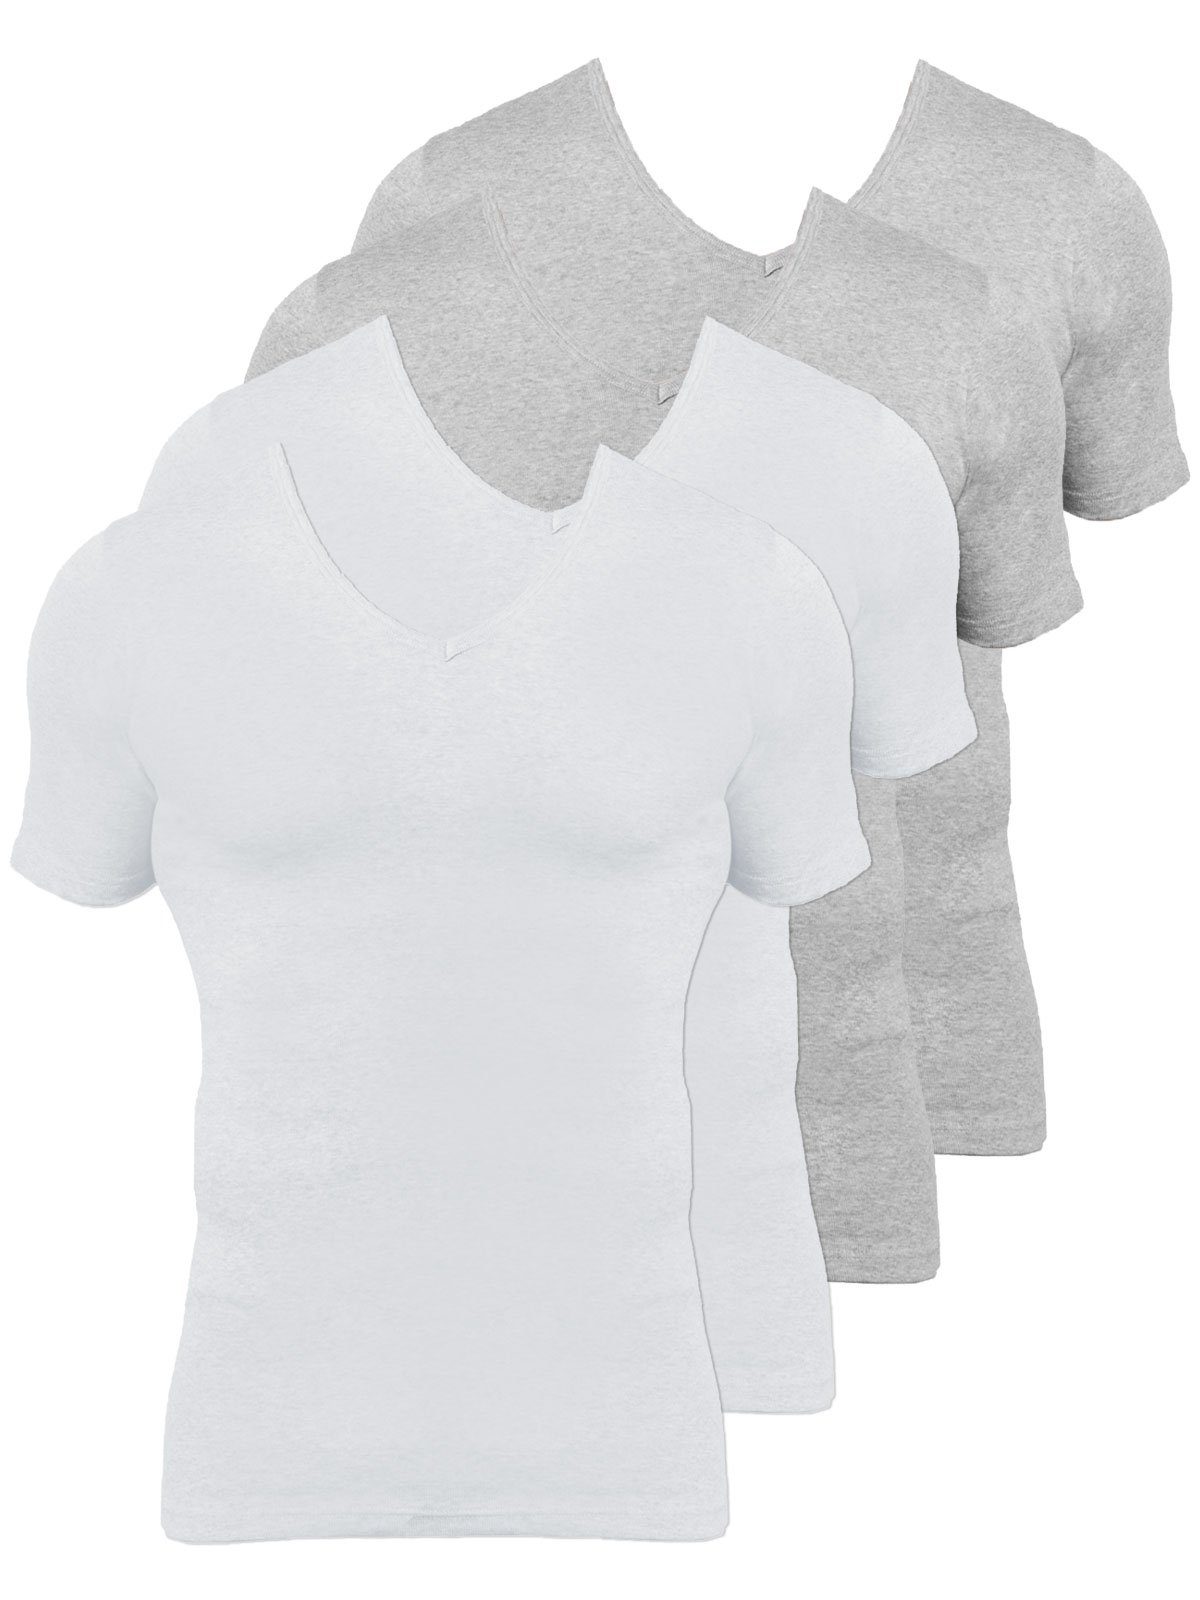 KUMPF Unterziehshirt 4er Sparpack Herren T-Shirt Bio Cotton (Spar-Set, 4-St) hohe Markenqualität weiss steingrau-melange